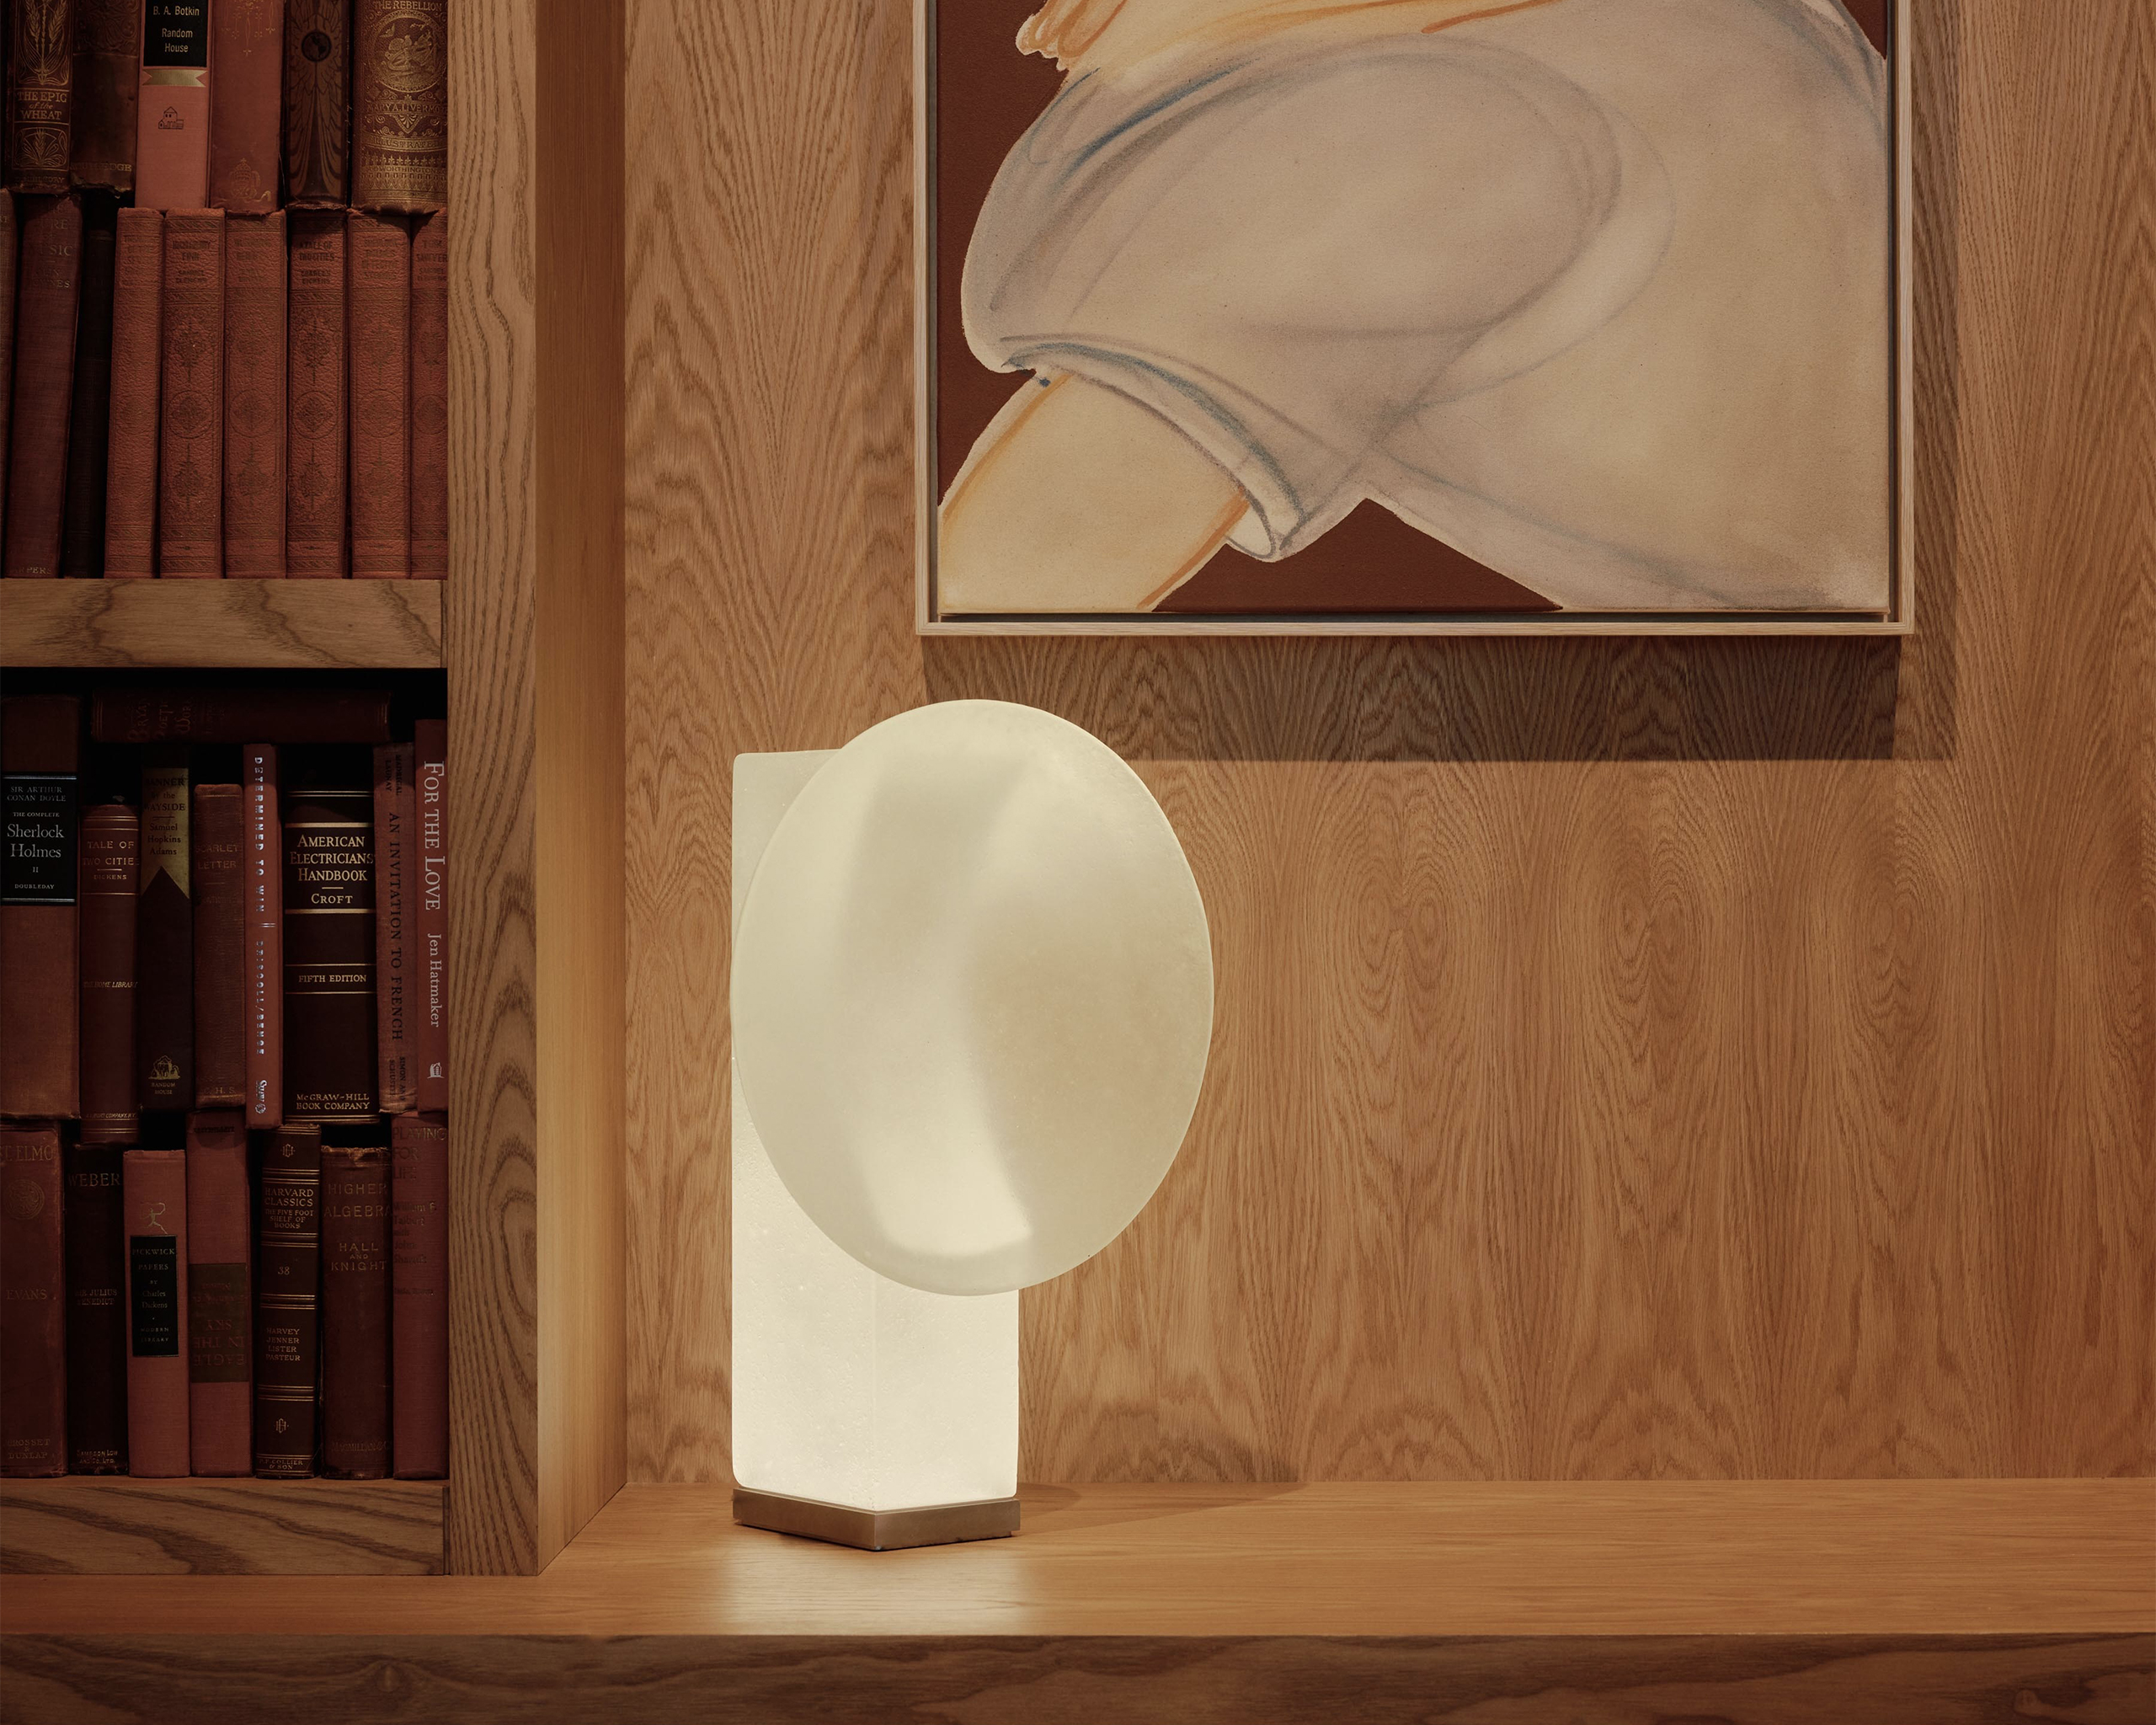 Limited edition table lamp - Vestige, designed by Ross Gardam on display in STUDIOTWENTYSEVEN's New York Gallery.